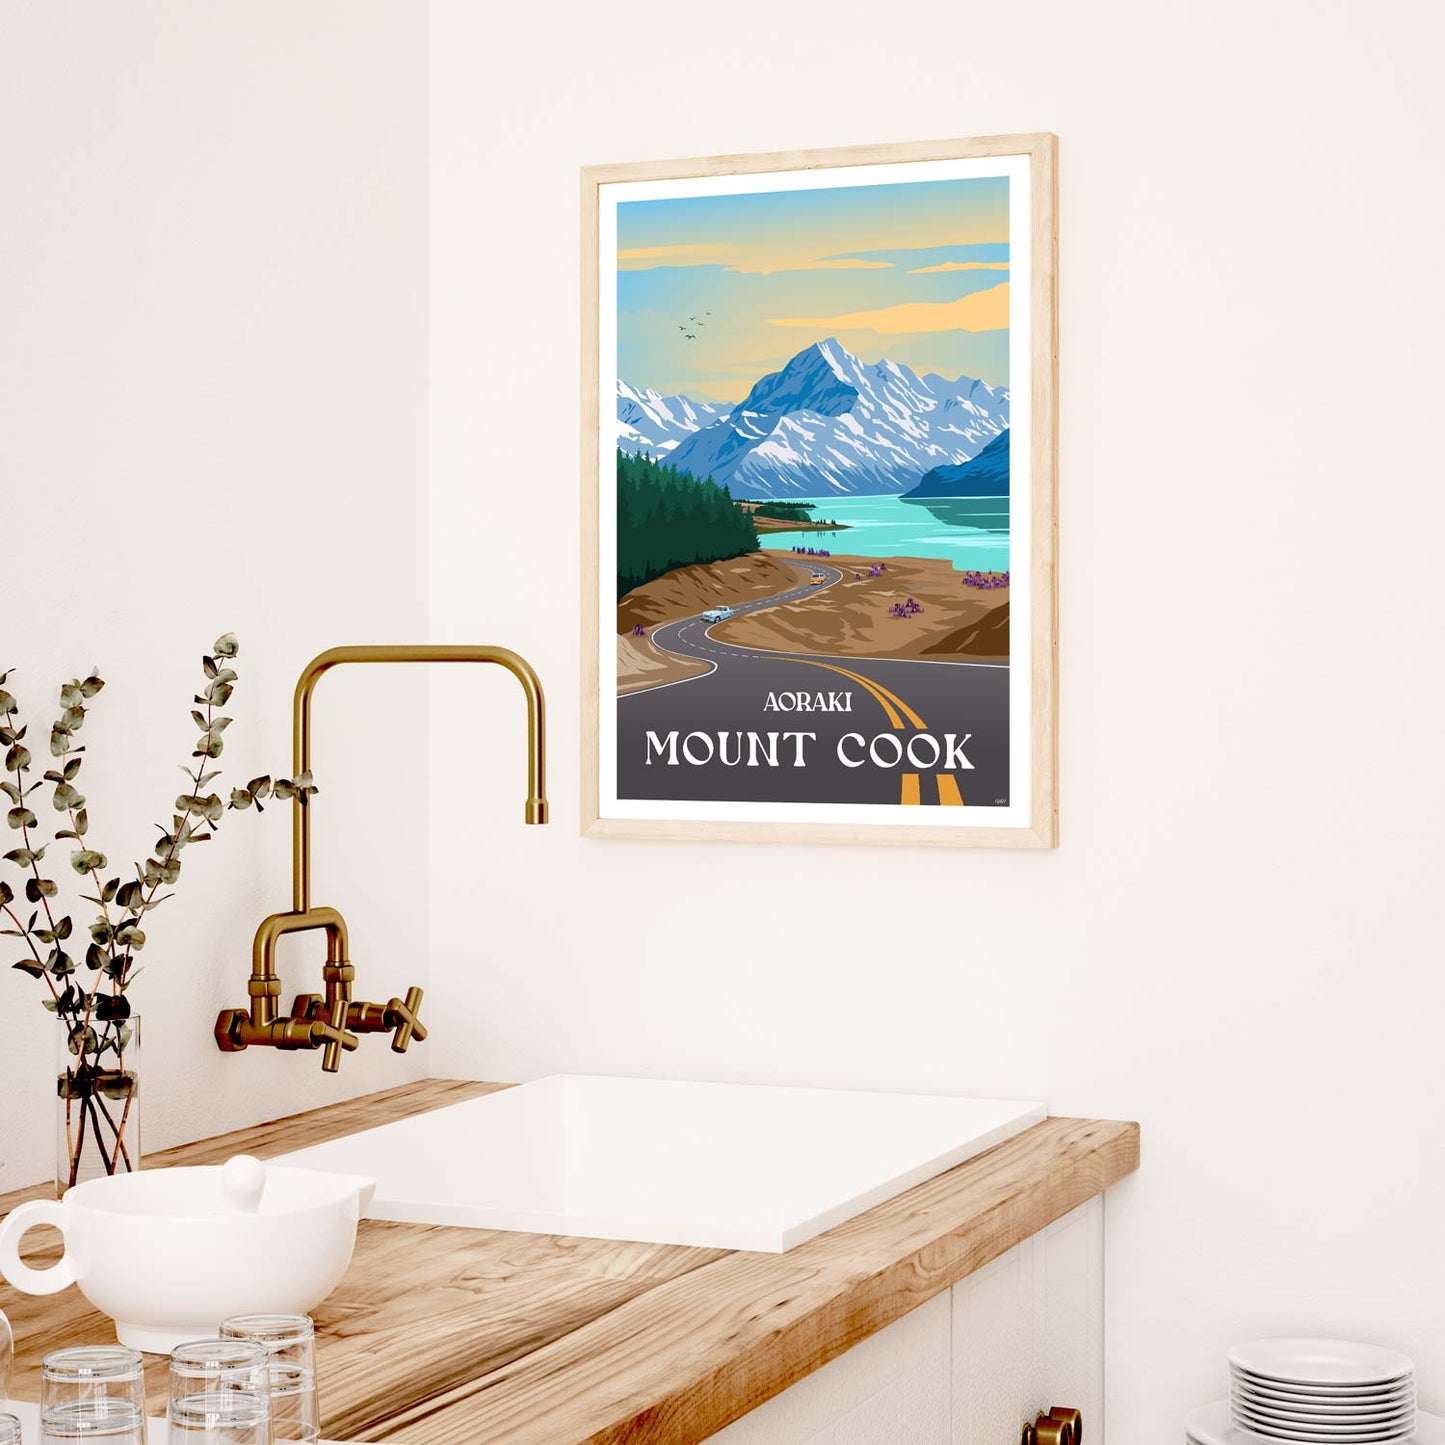 Aoraki - Mount Cook Travel Poster, New Zealand